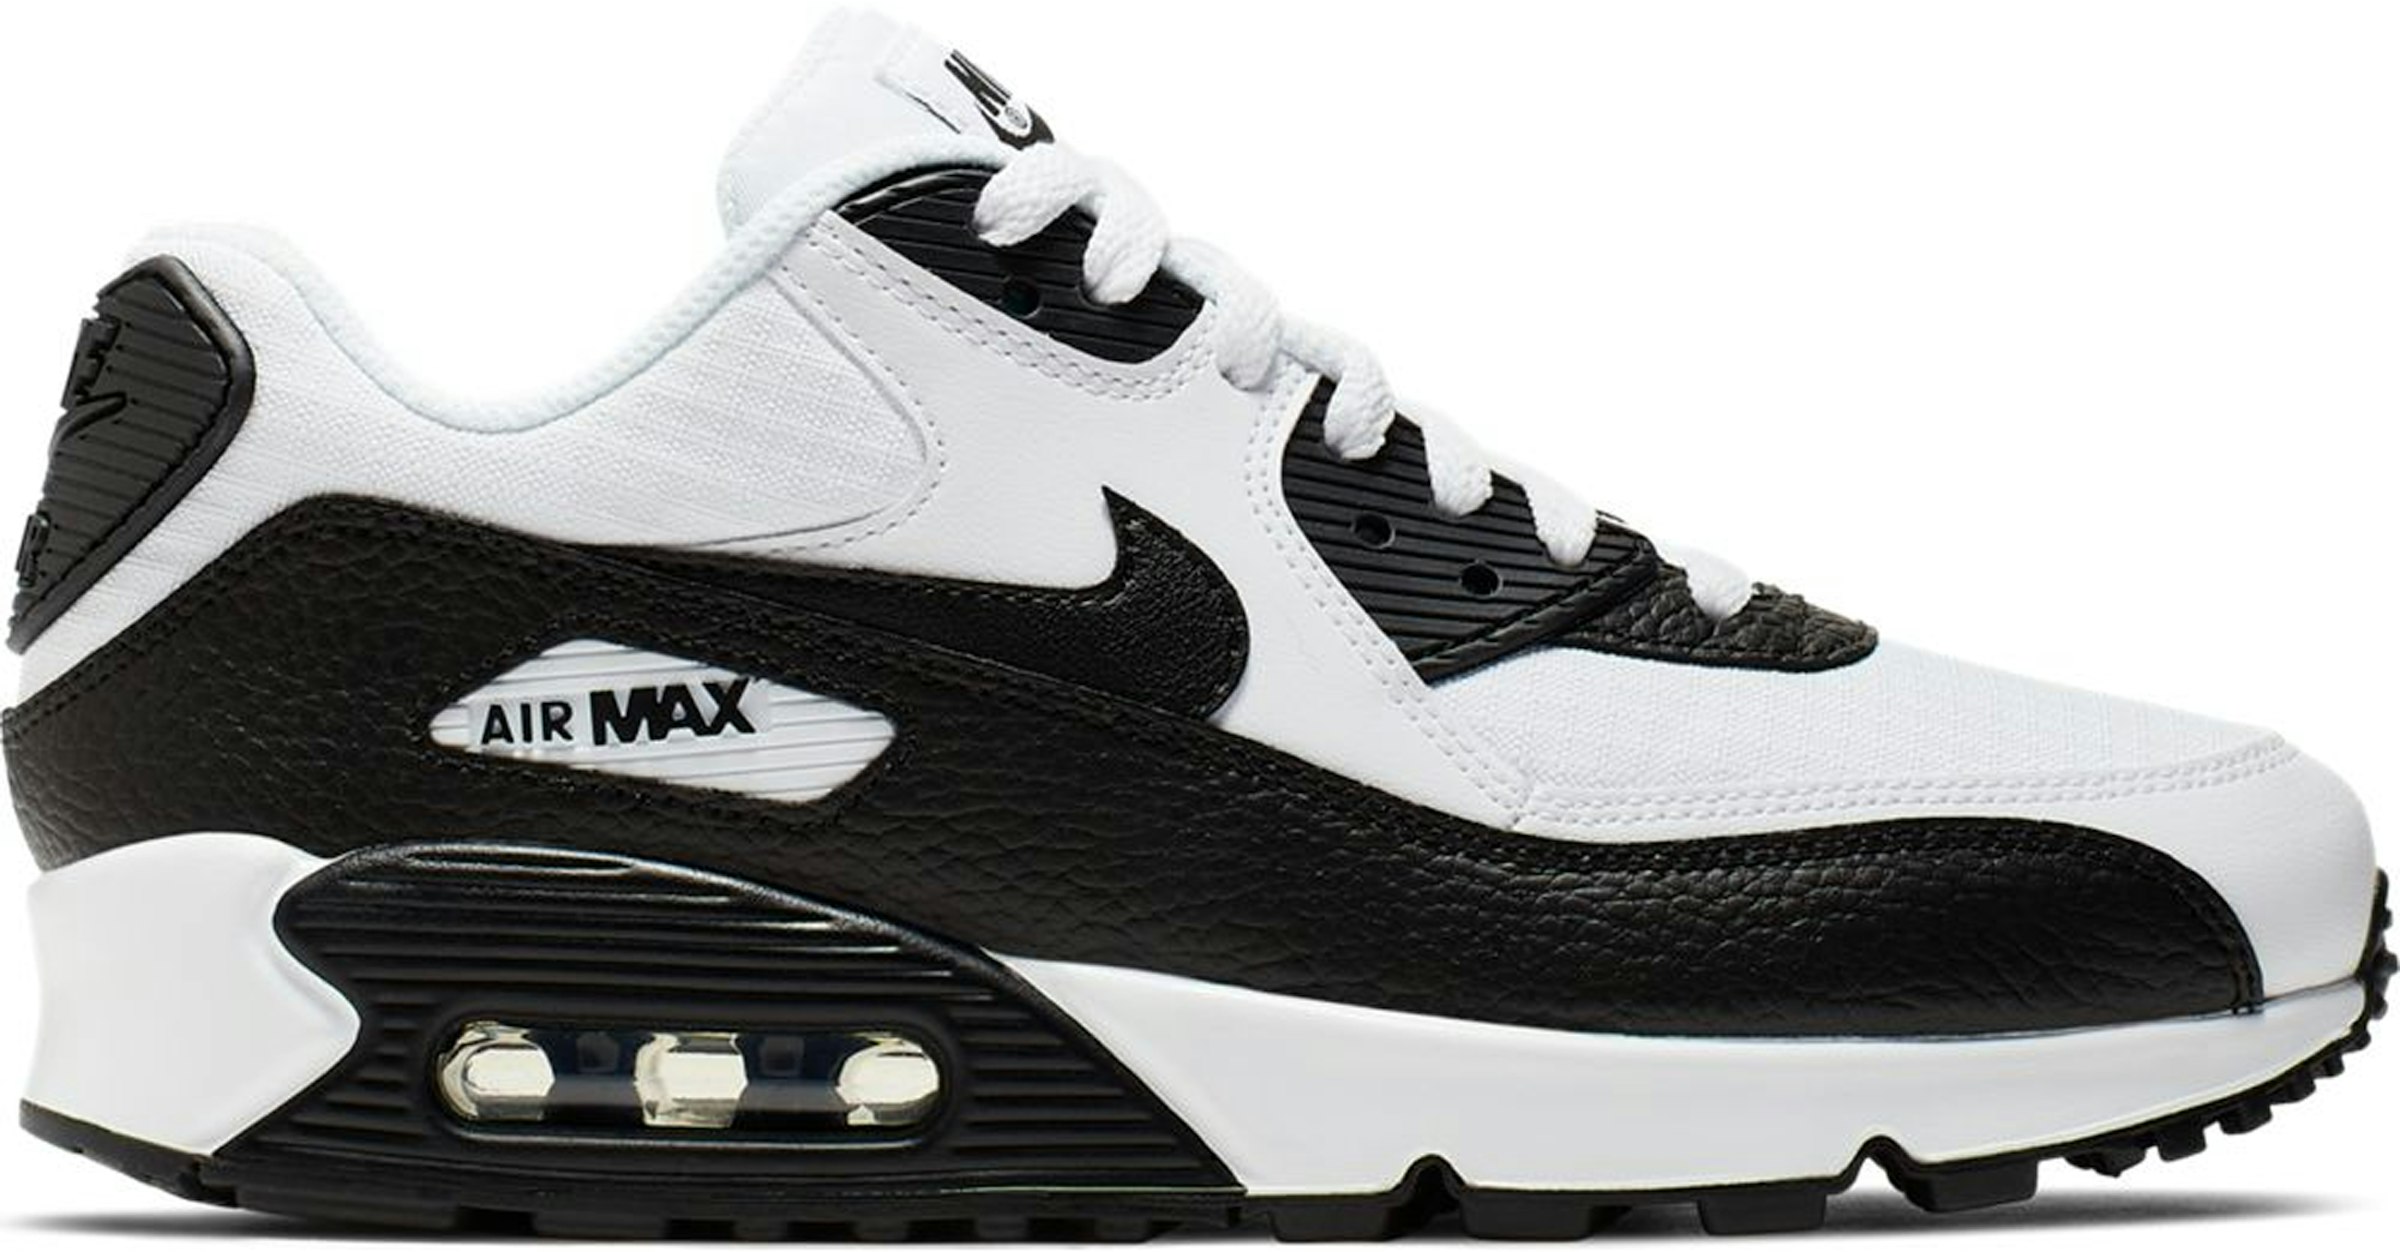 Pigmento carpintero Mediana Nike Air Max 90 White Black (2019) - 325213-139 - US